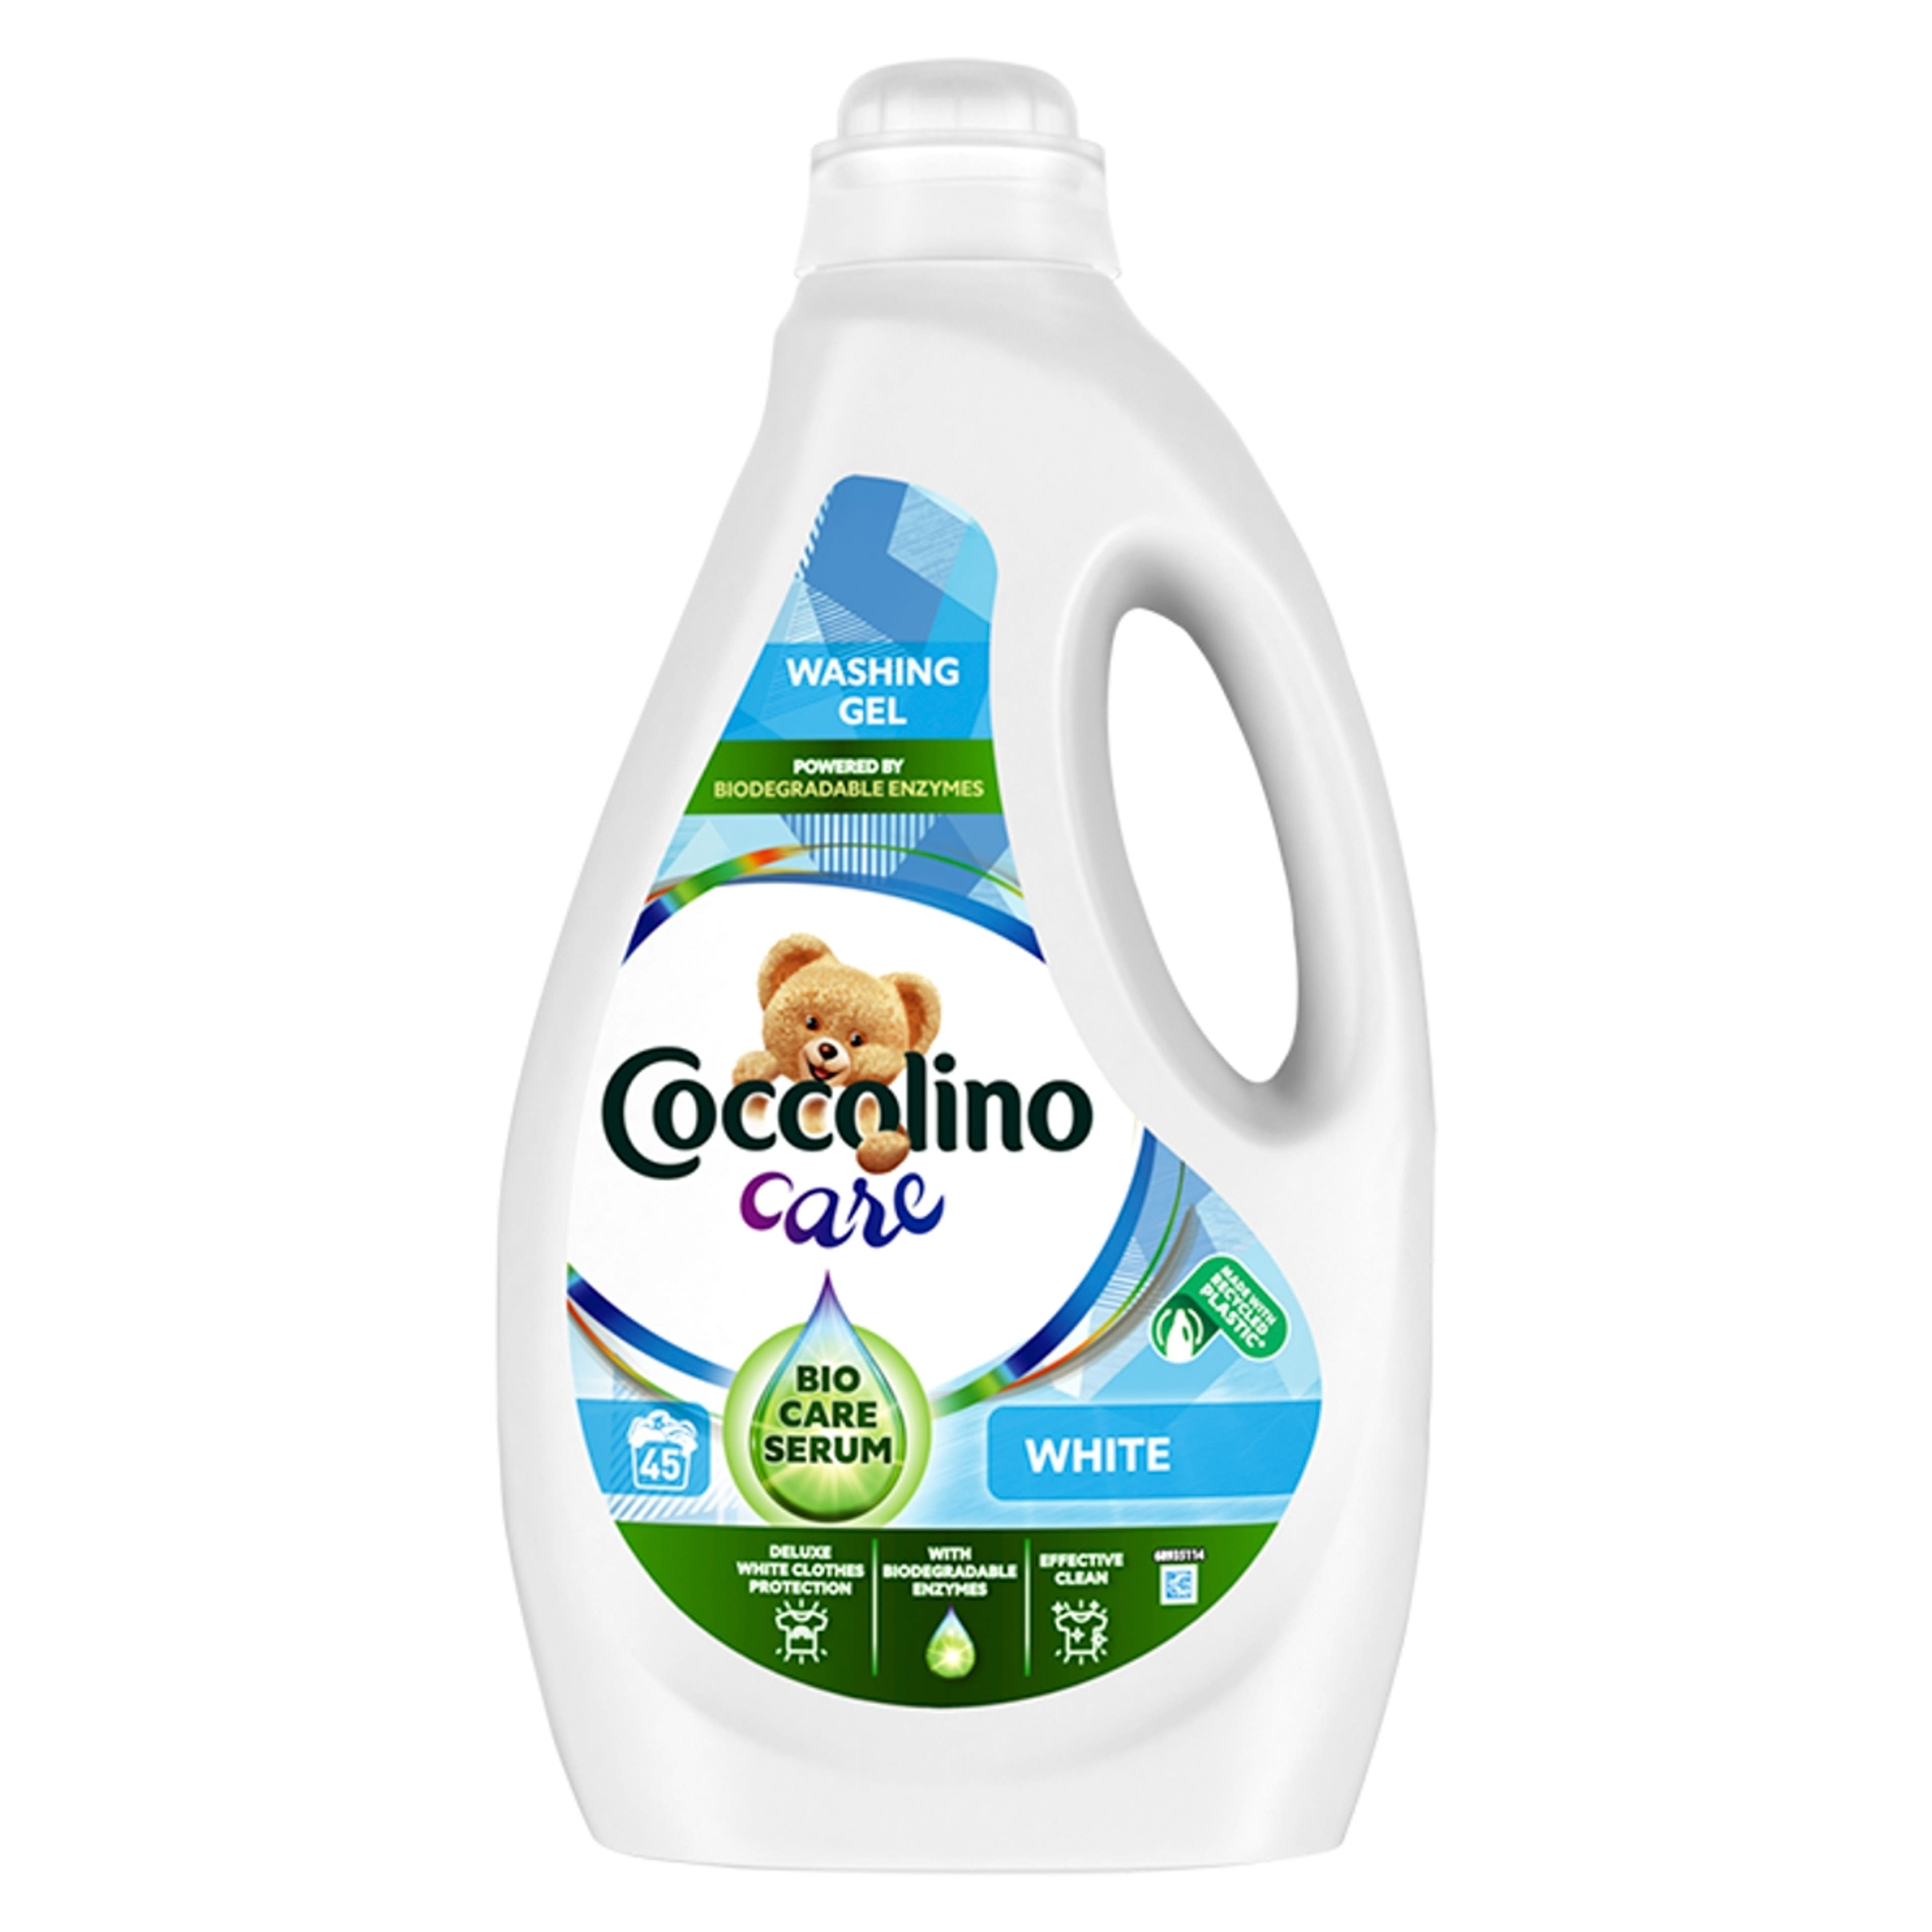 Coccolino Care mosógél fehér ruhákhoz 45 mosás - 1800 ml-1